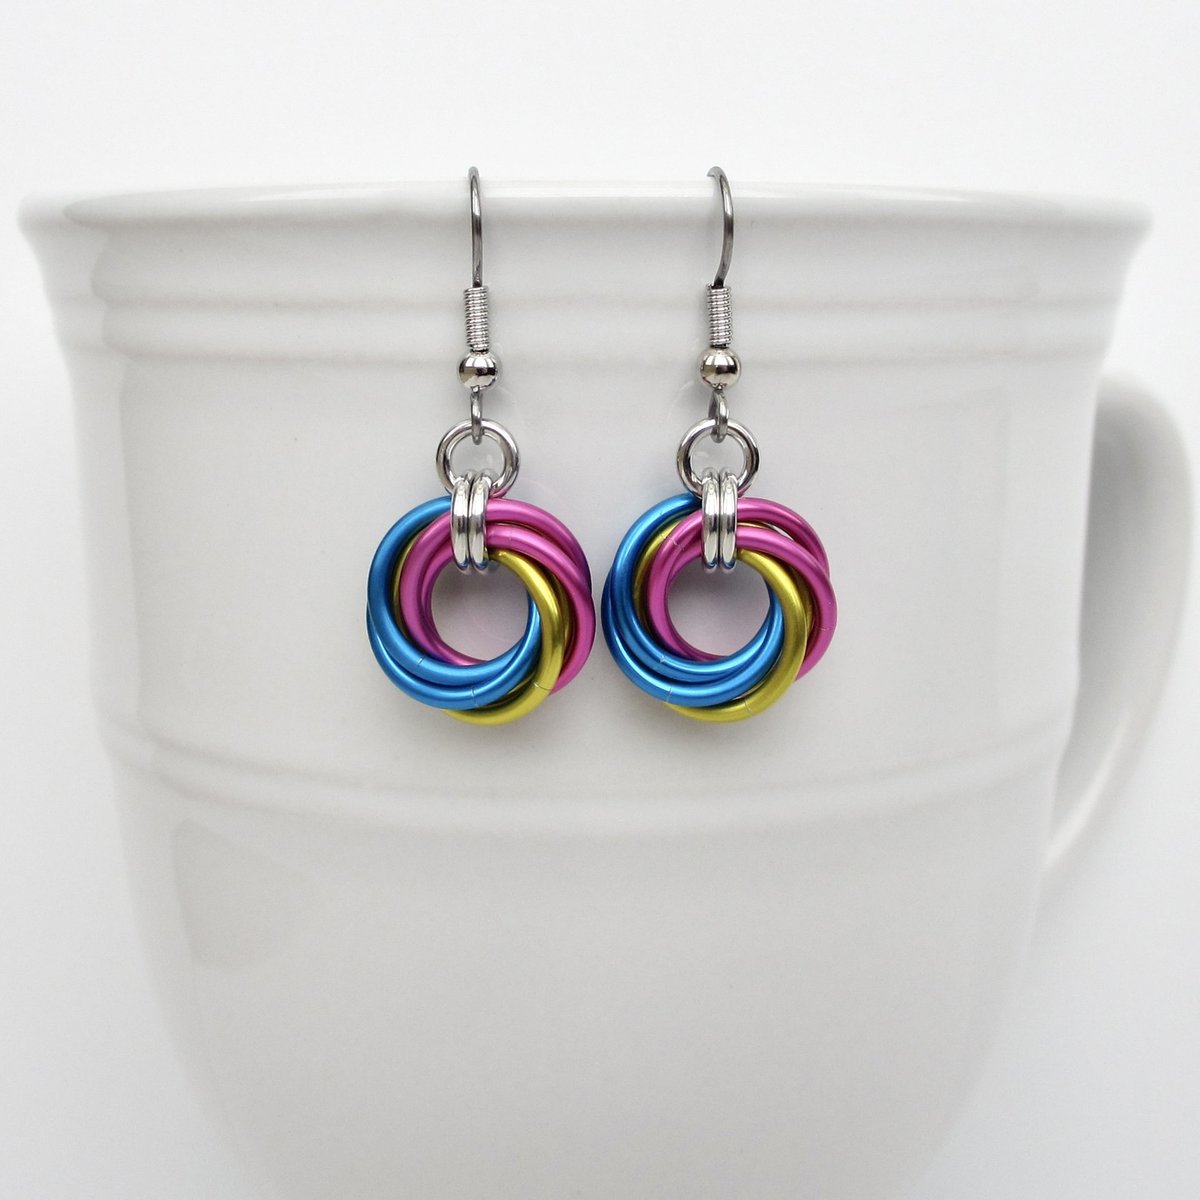 Pansexual pride earrings, love knot chainmail earrings, pan pride jewelry; pink, yellow, light blue